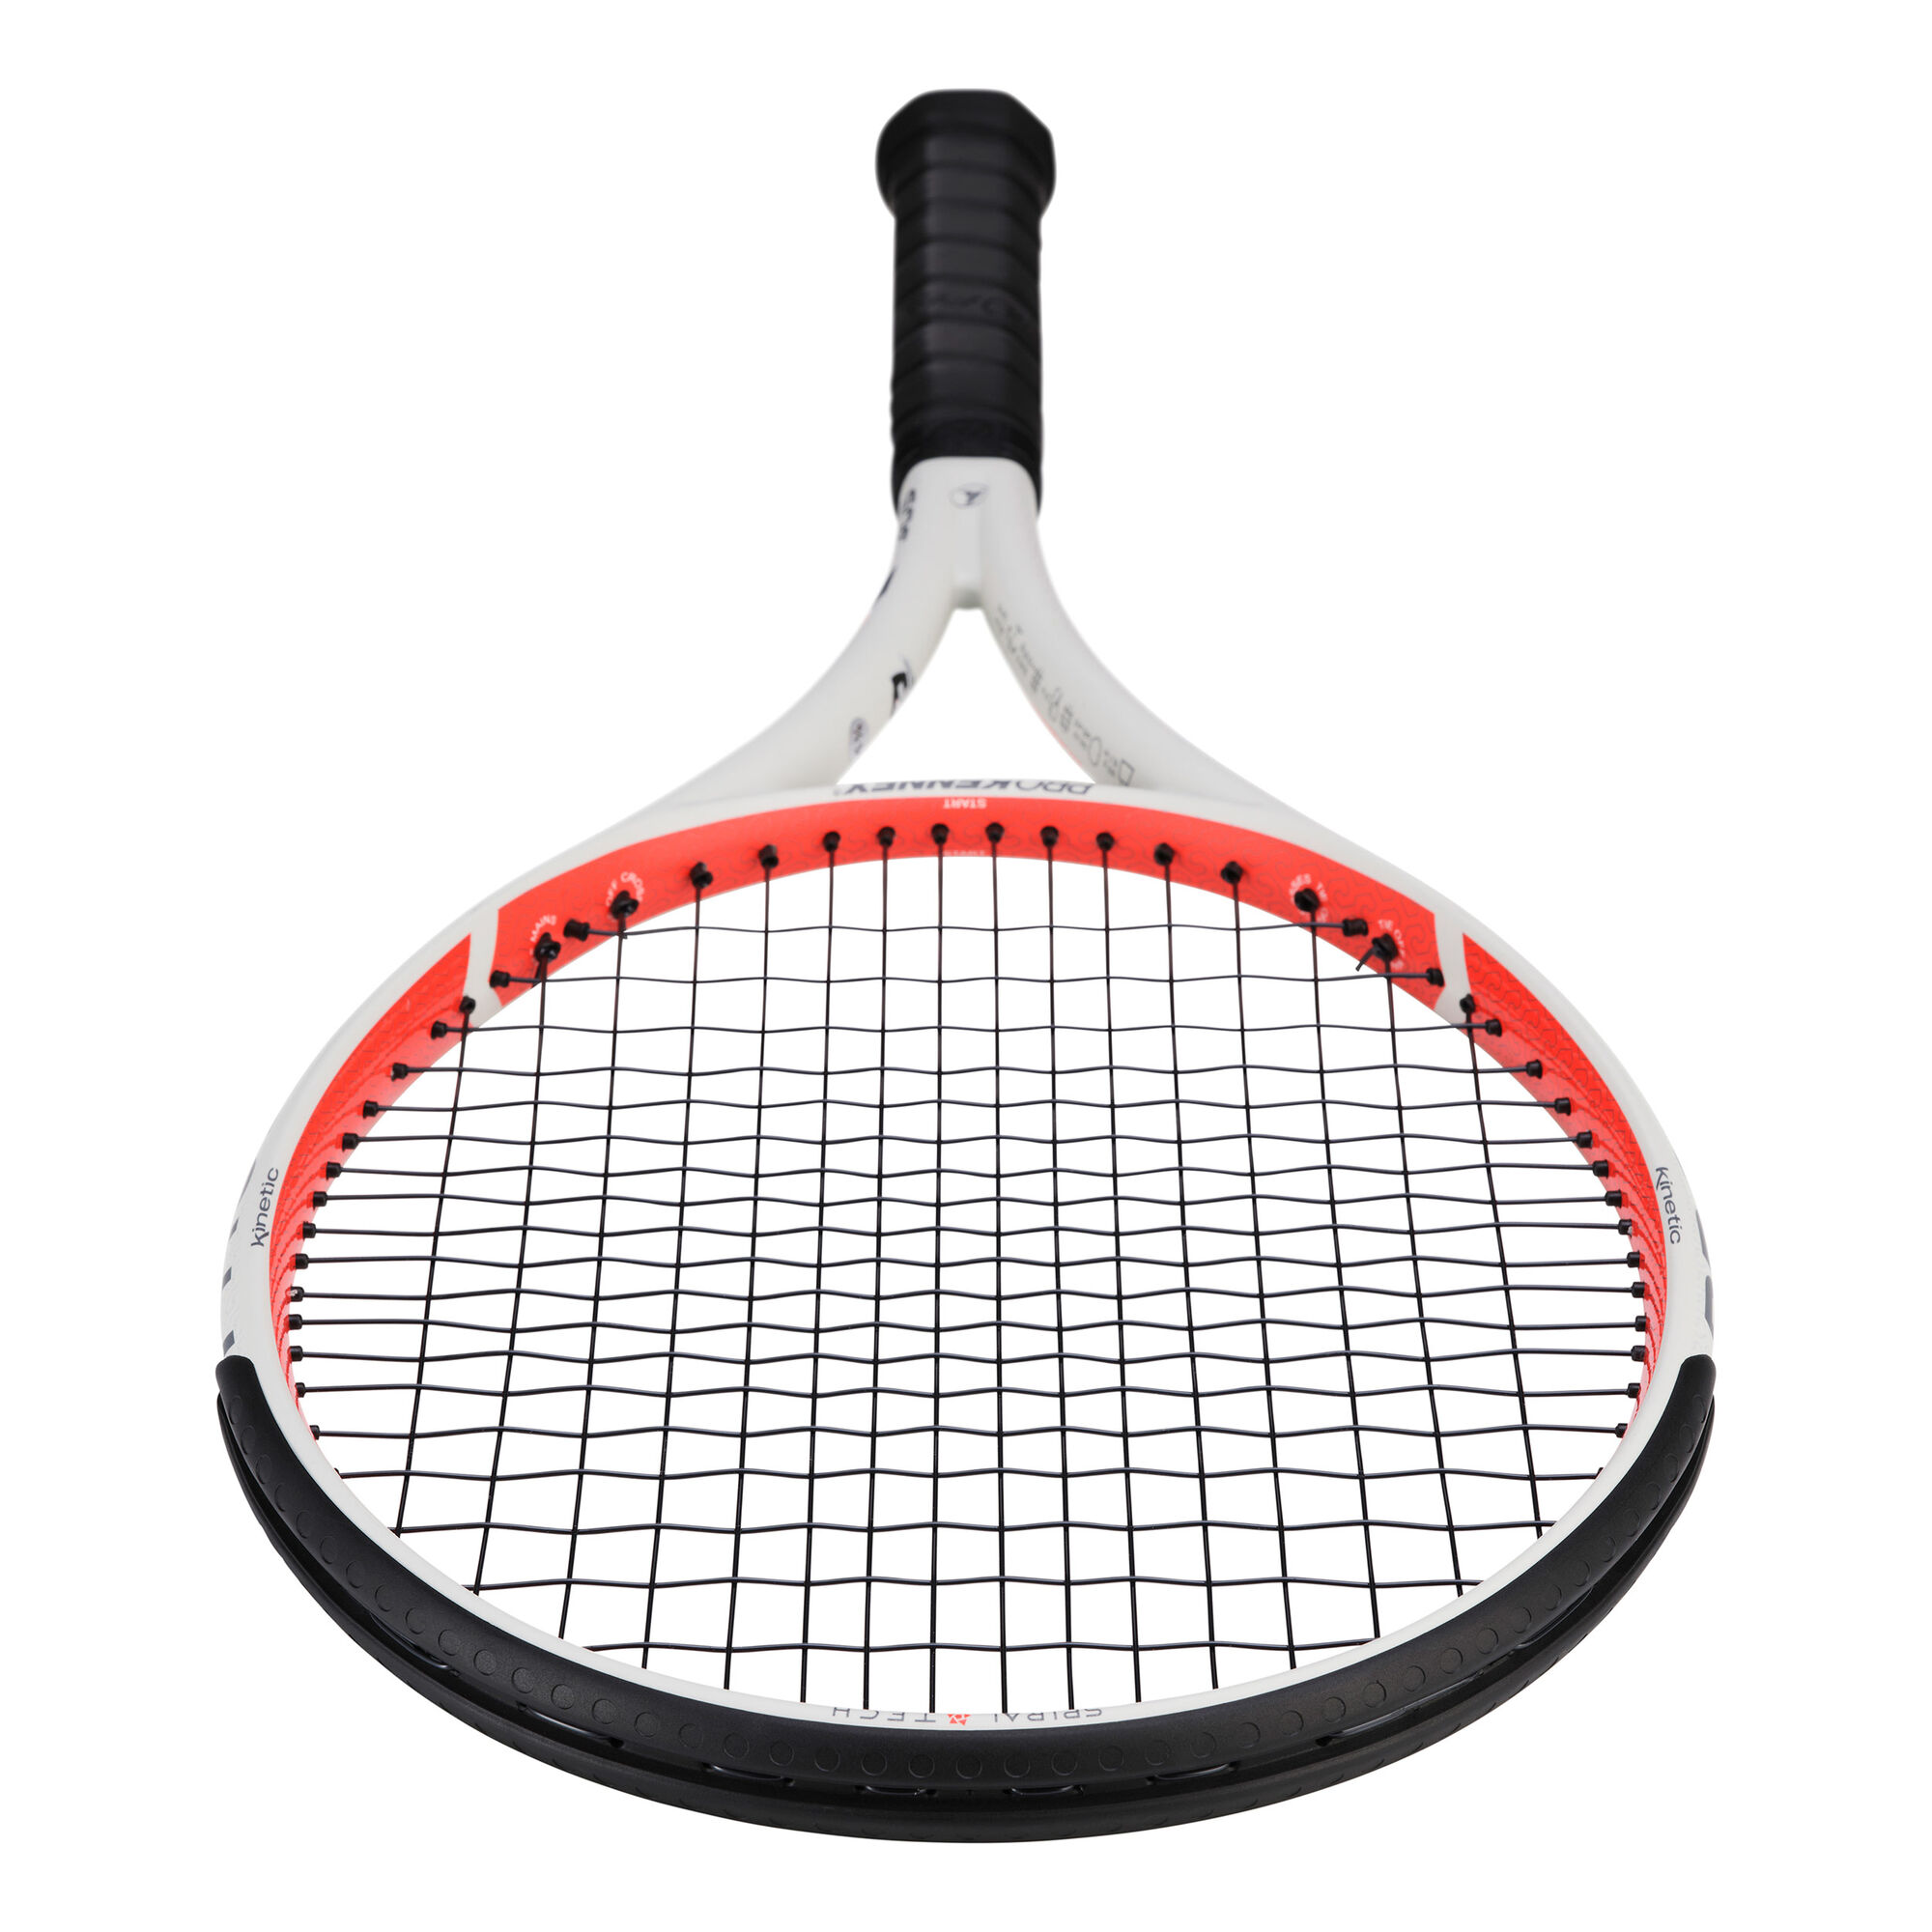 Buy PROKENNEX Kinetic 10 (305g) online | Tennis Point COM